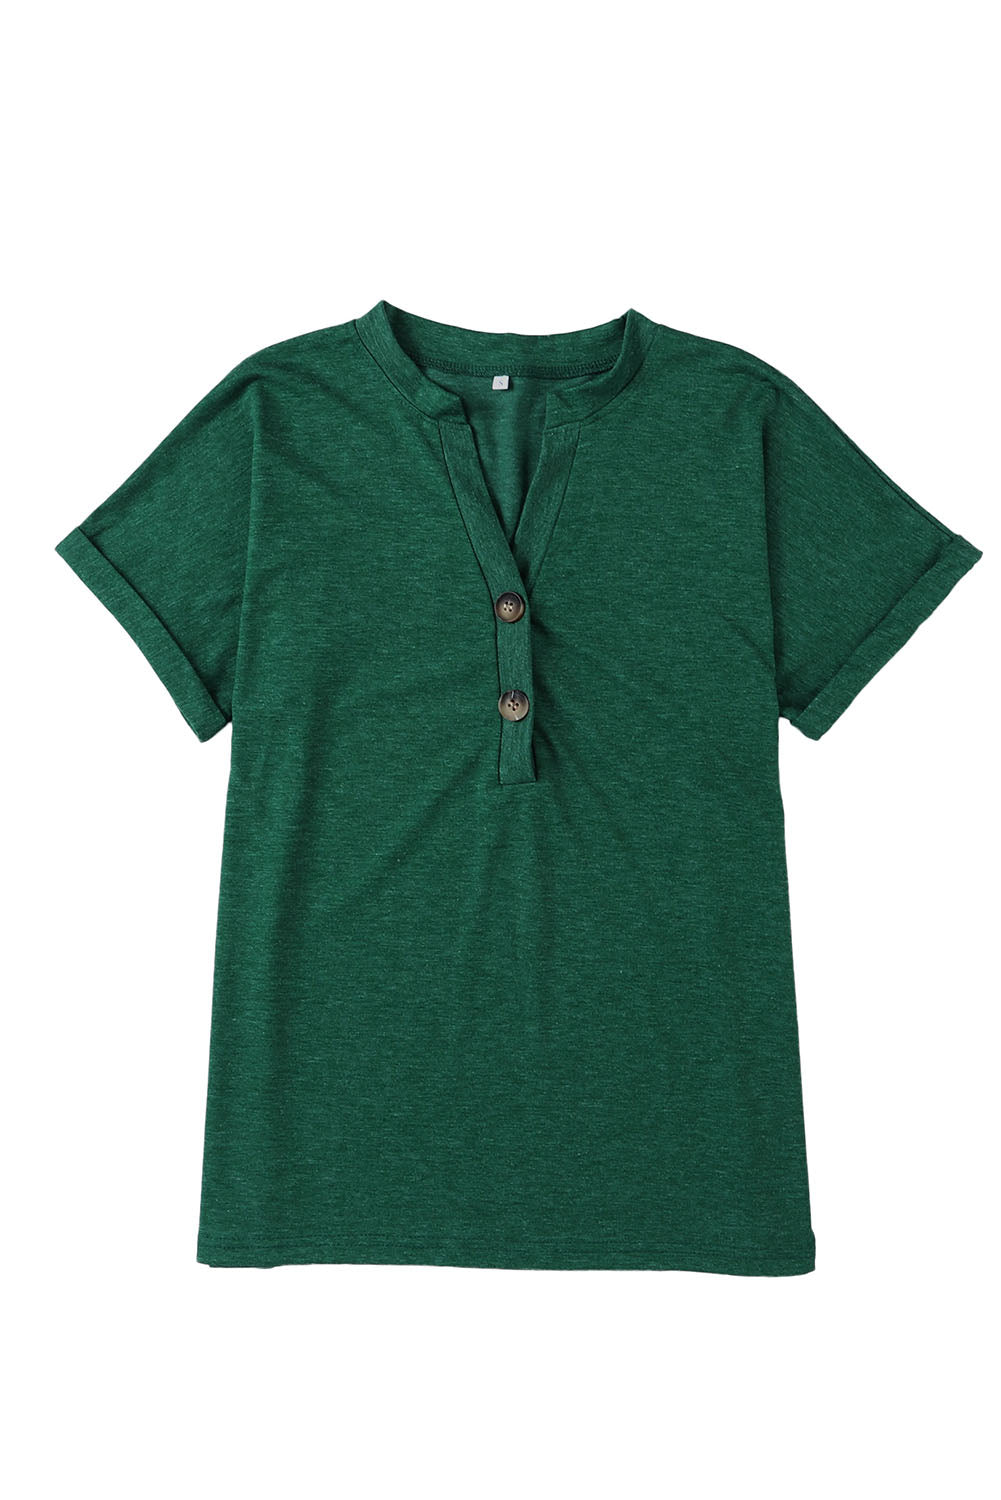 Green Button V Neck Short Sleeve Casual T Shirt